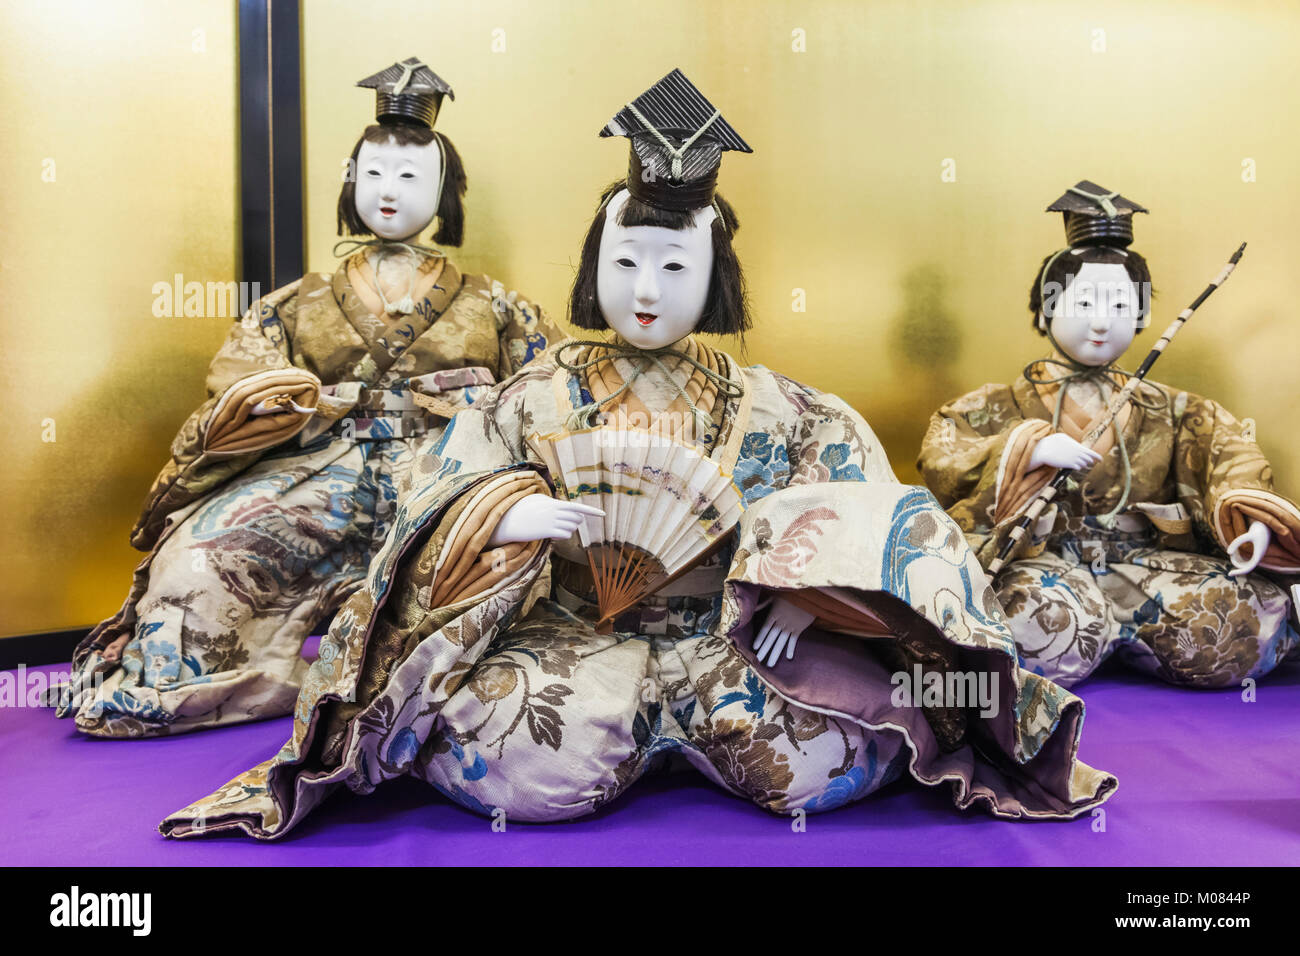 Japan, Honshu, Präfektur Shizuoka, Atami, Atami Schloss, Ausstellung der Japanische Puppe in historischen Kostümen Stockfoto